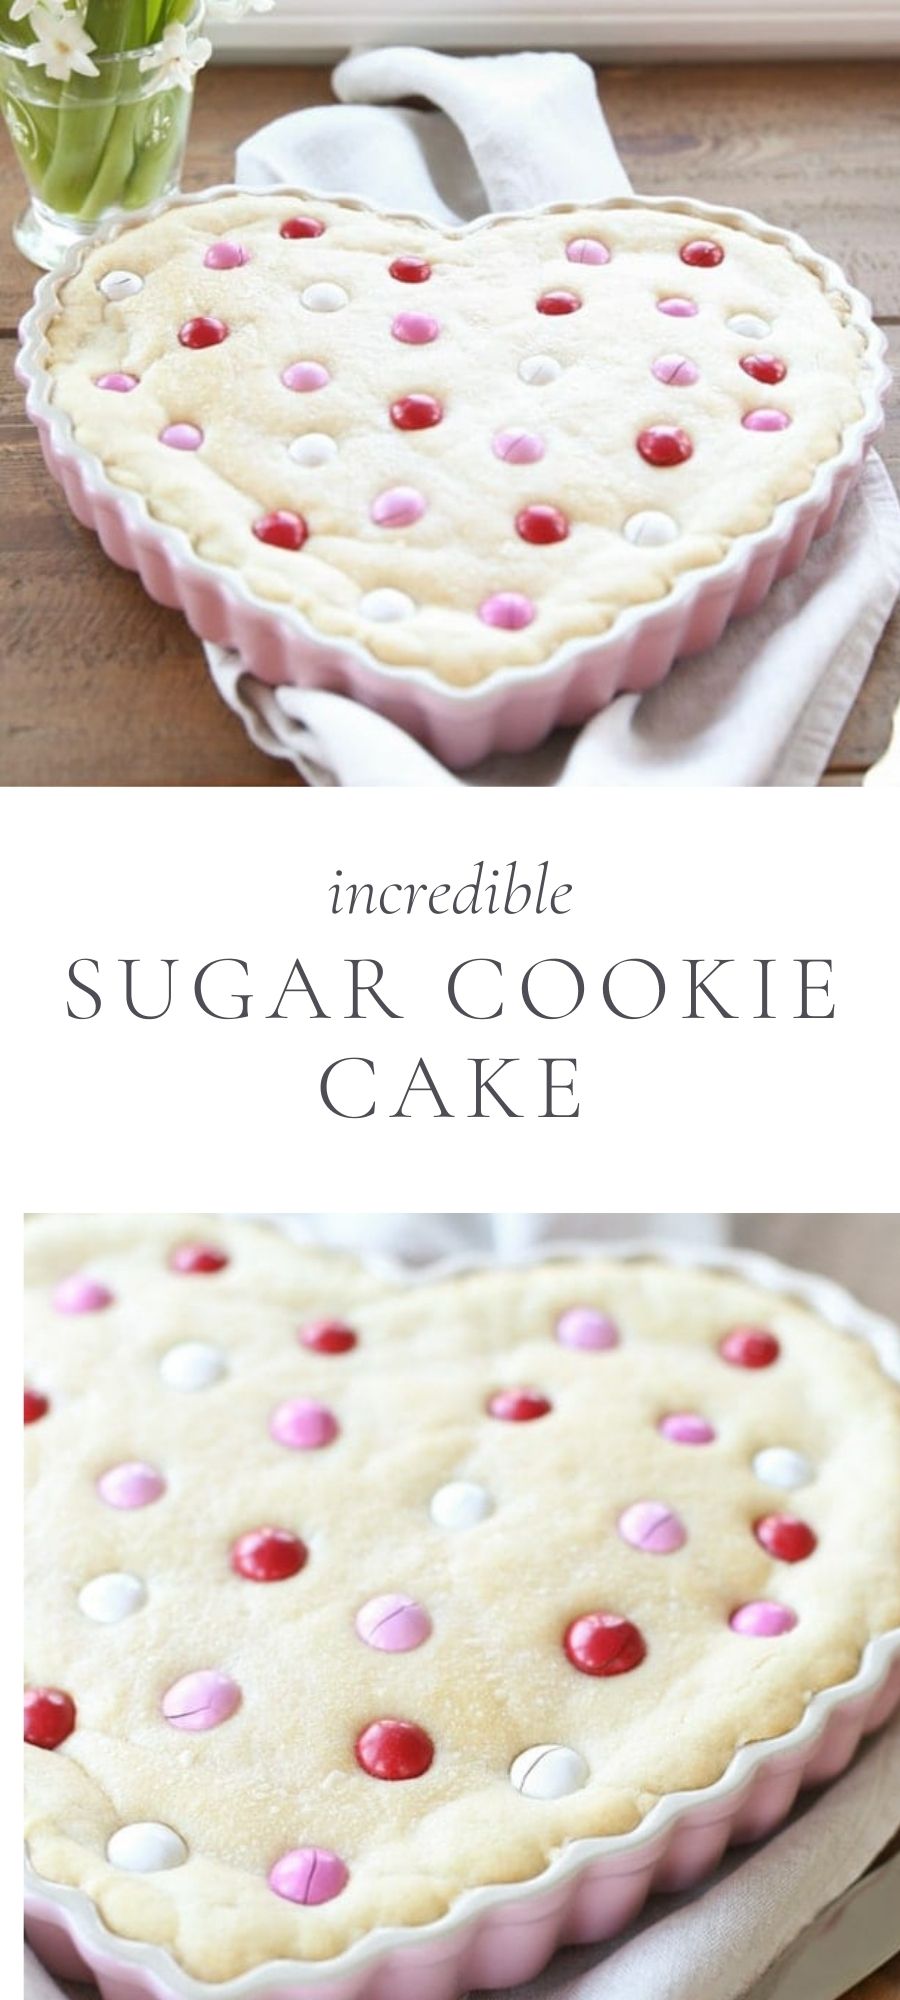 Sugar cookie cake in heart shaped baking pan